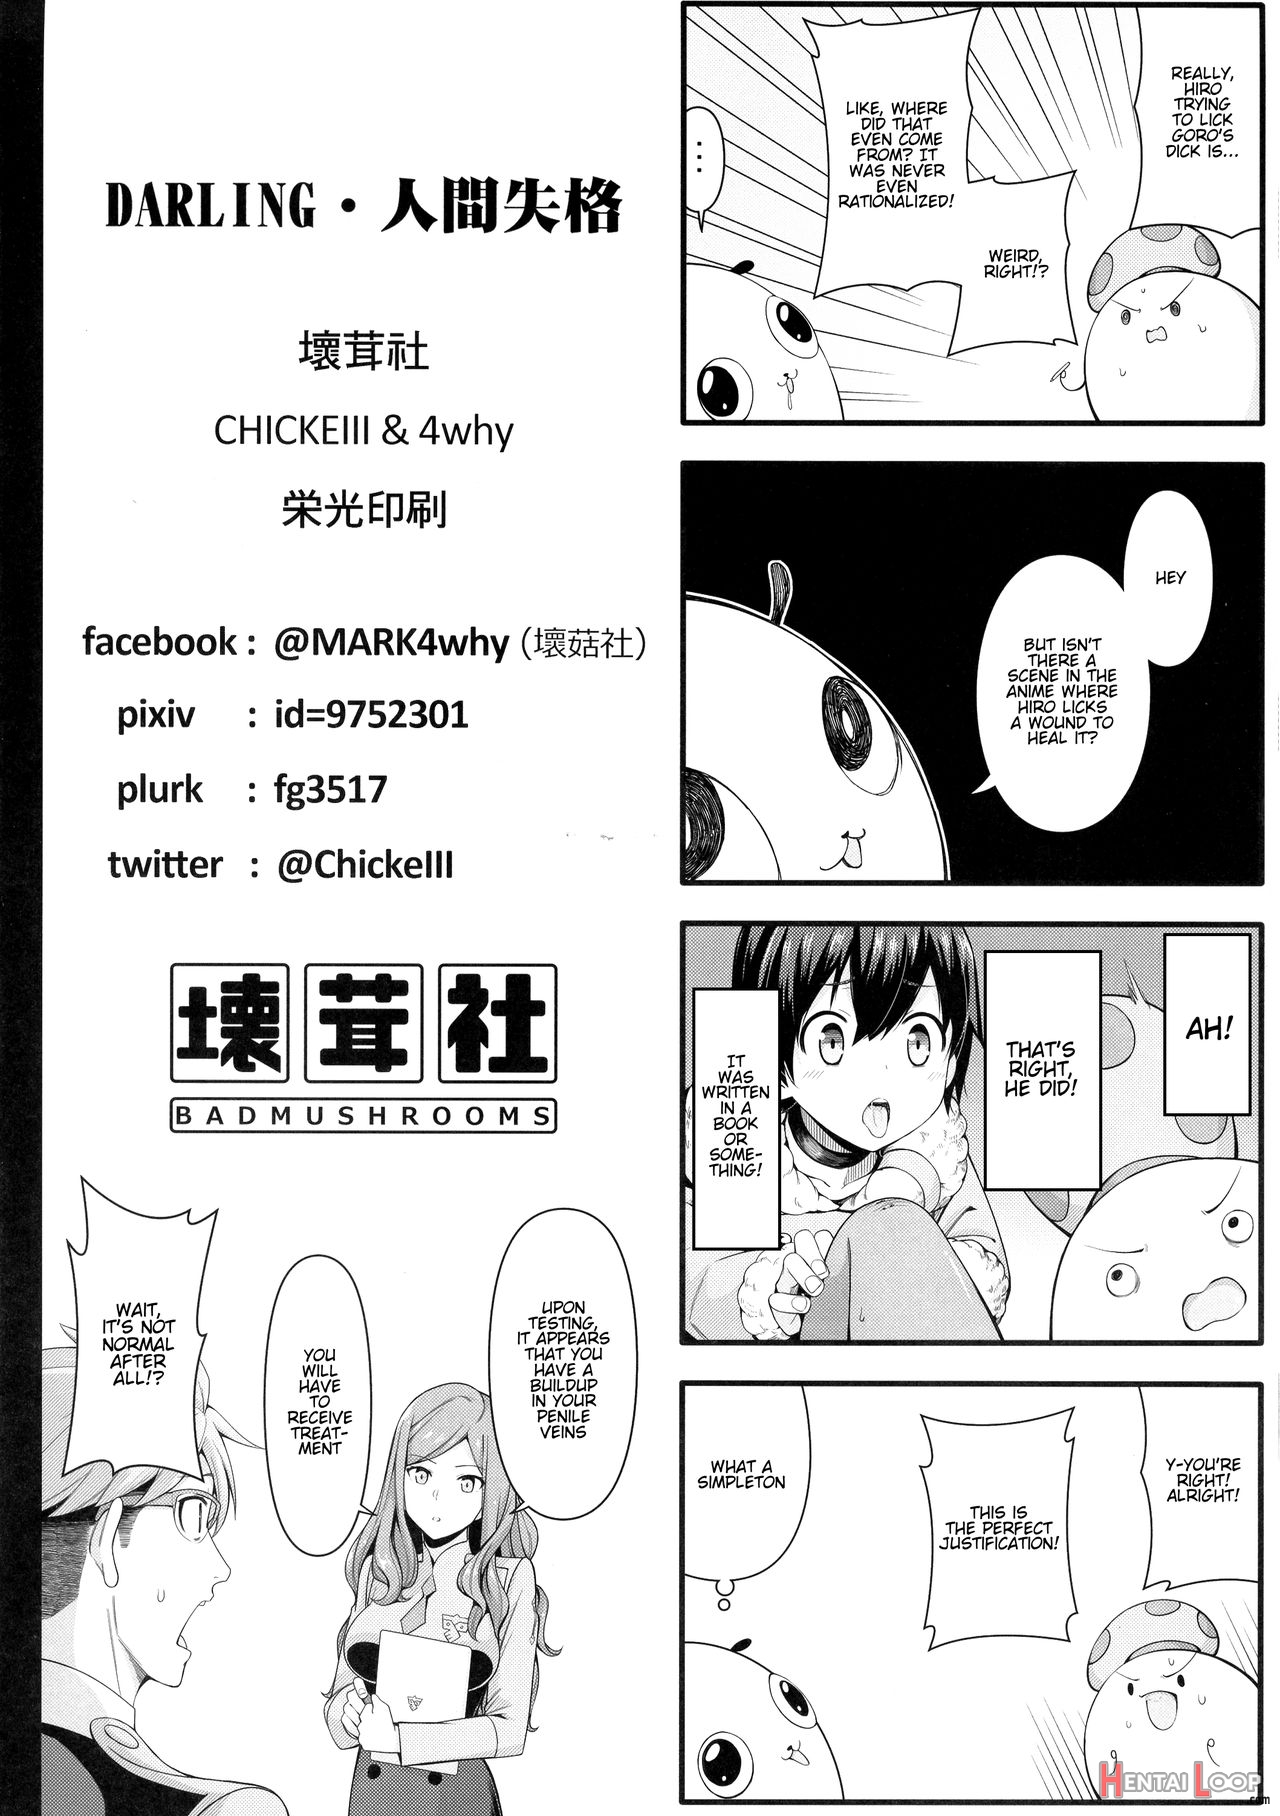 Darling Ningen Shikkaku page 31